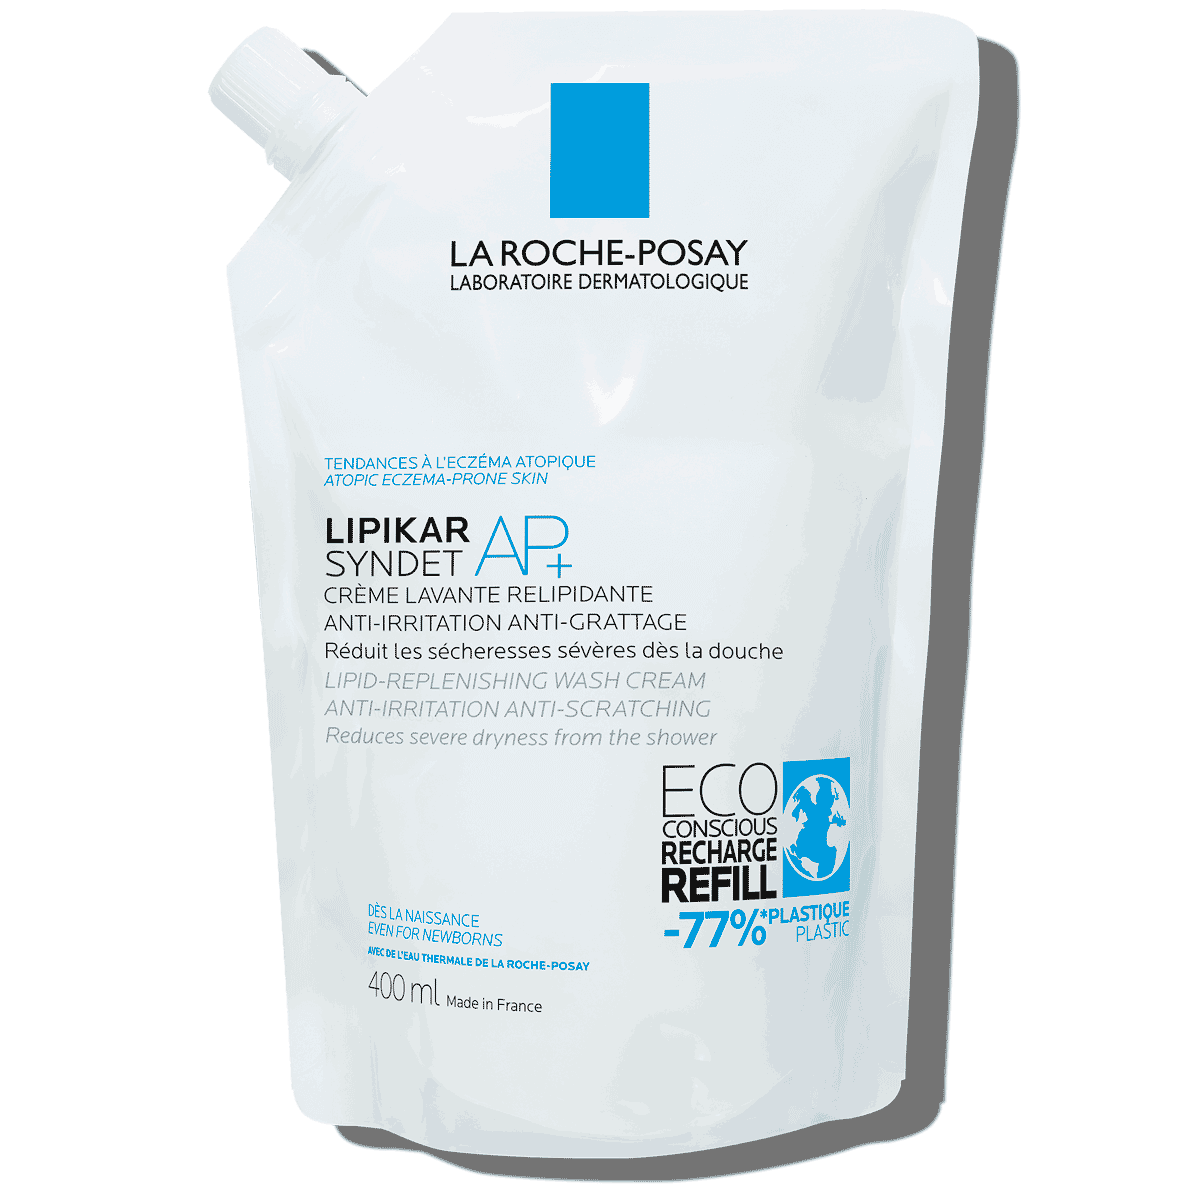 LaRochePosay-Product-Eczema-Lipikar-Eco-conscious-Refill-SyndetAP-400ml-3337875735766-FSS